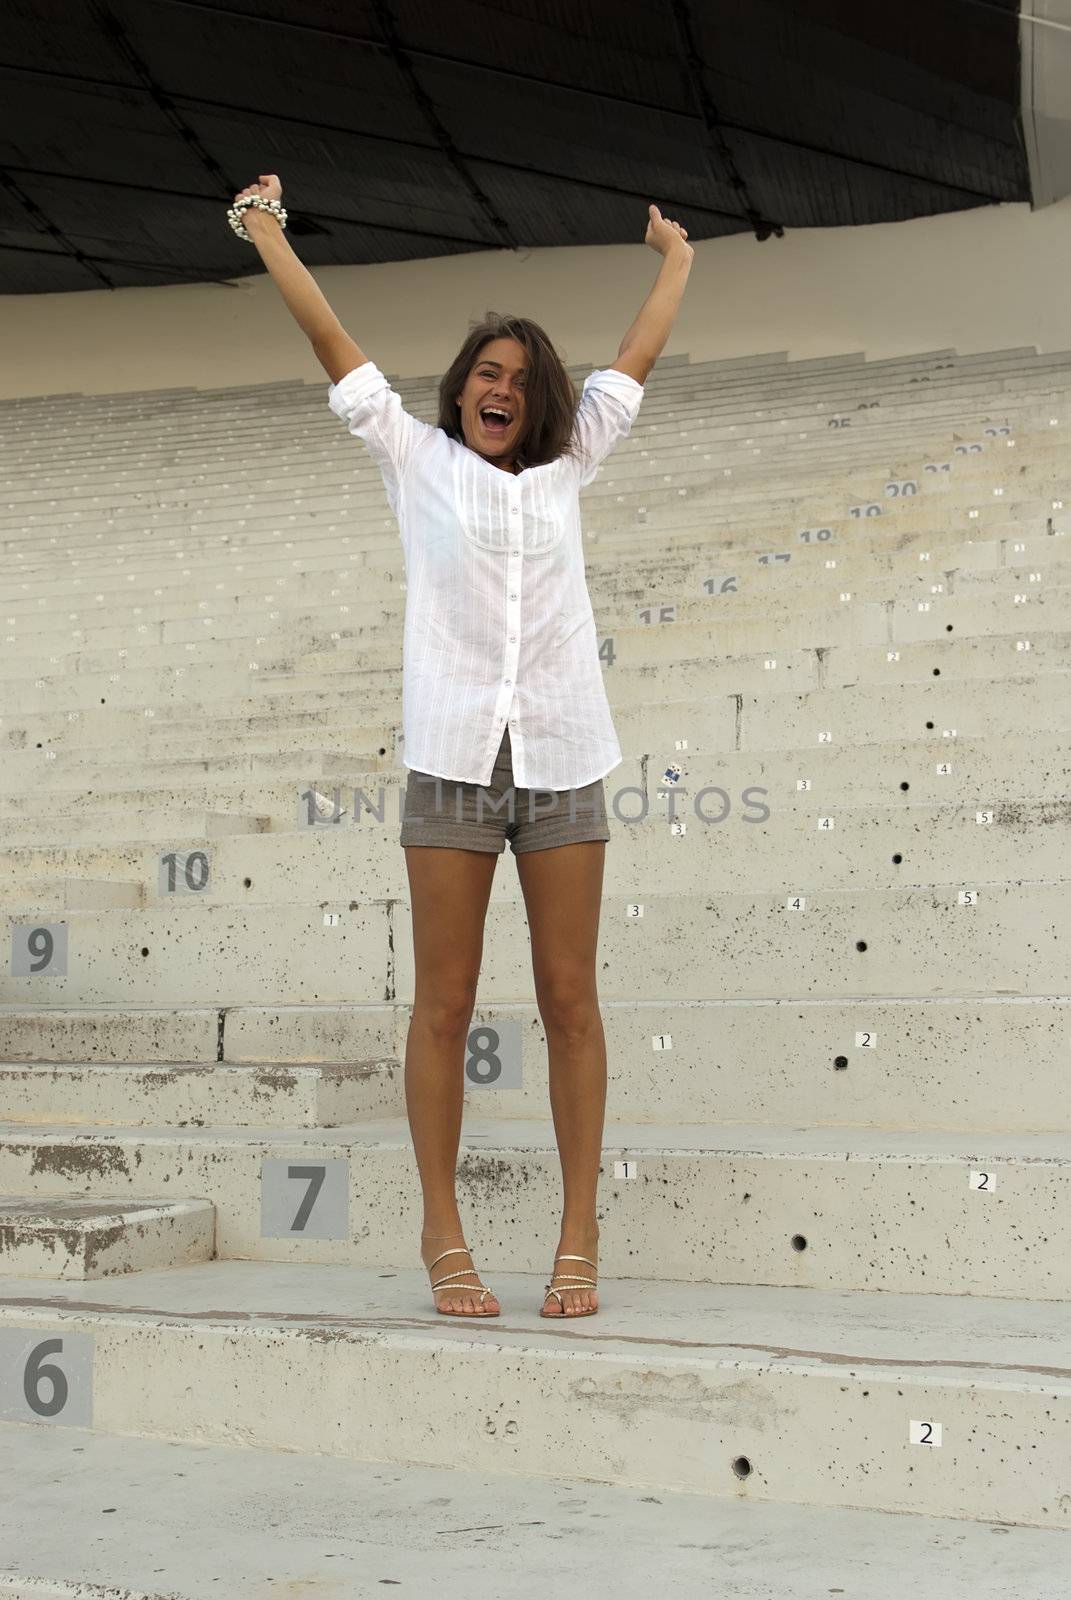 Beautiful girl jumping in an empty stadium